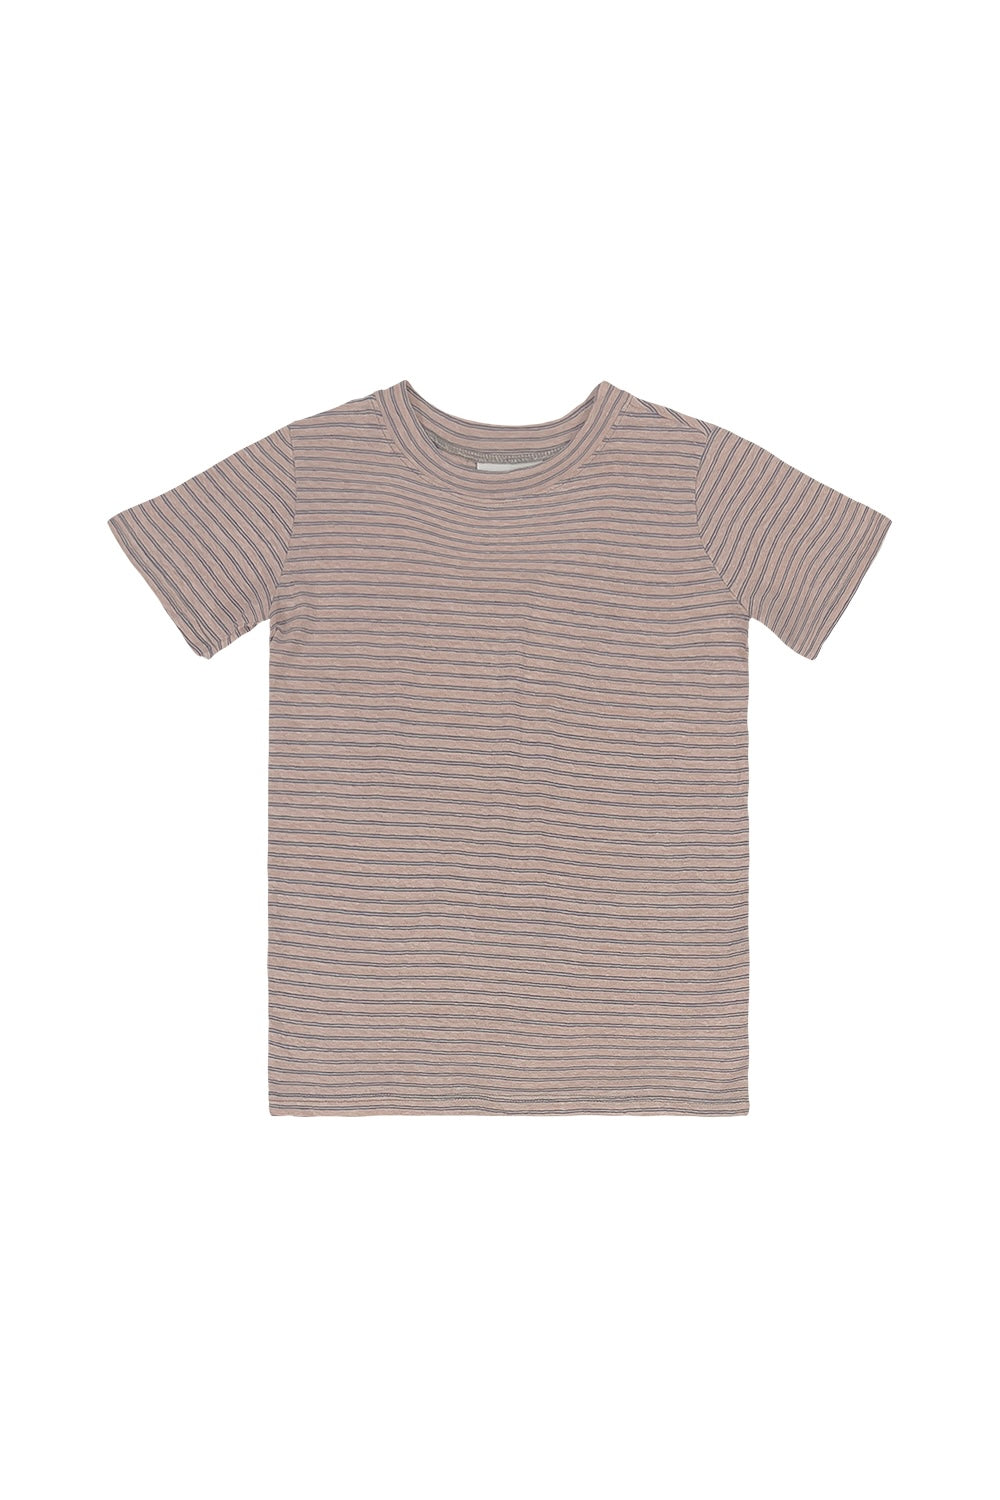 Stripe Grom Tee | Jungmaven Hemp Clothing & Accessories / Color: Pink/Blue/Canvas Thin Stripe